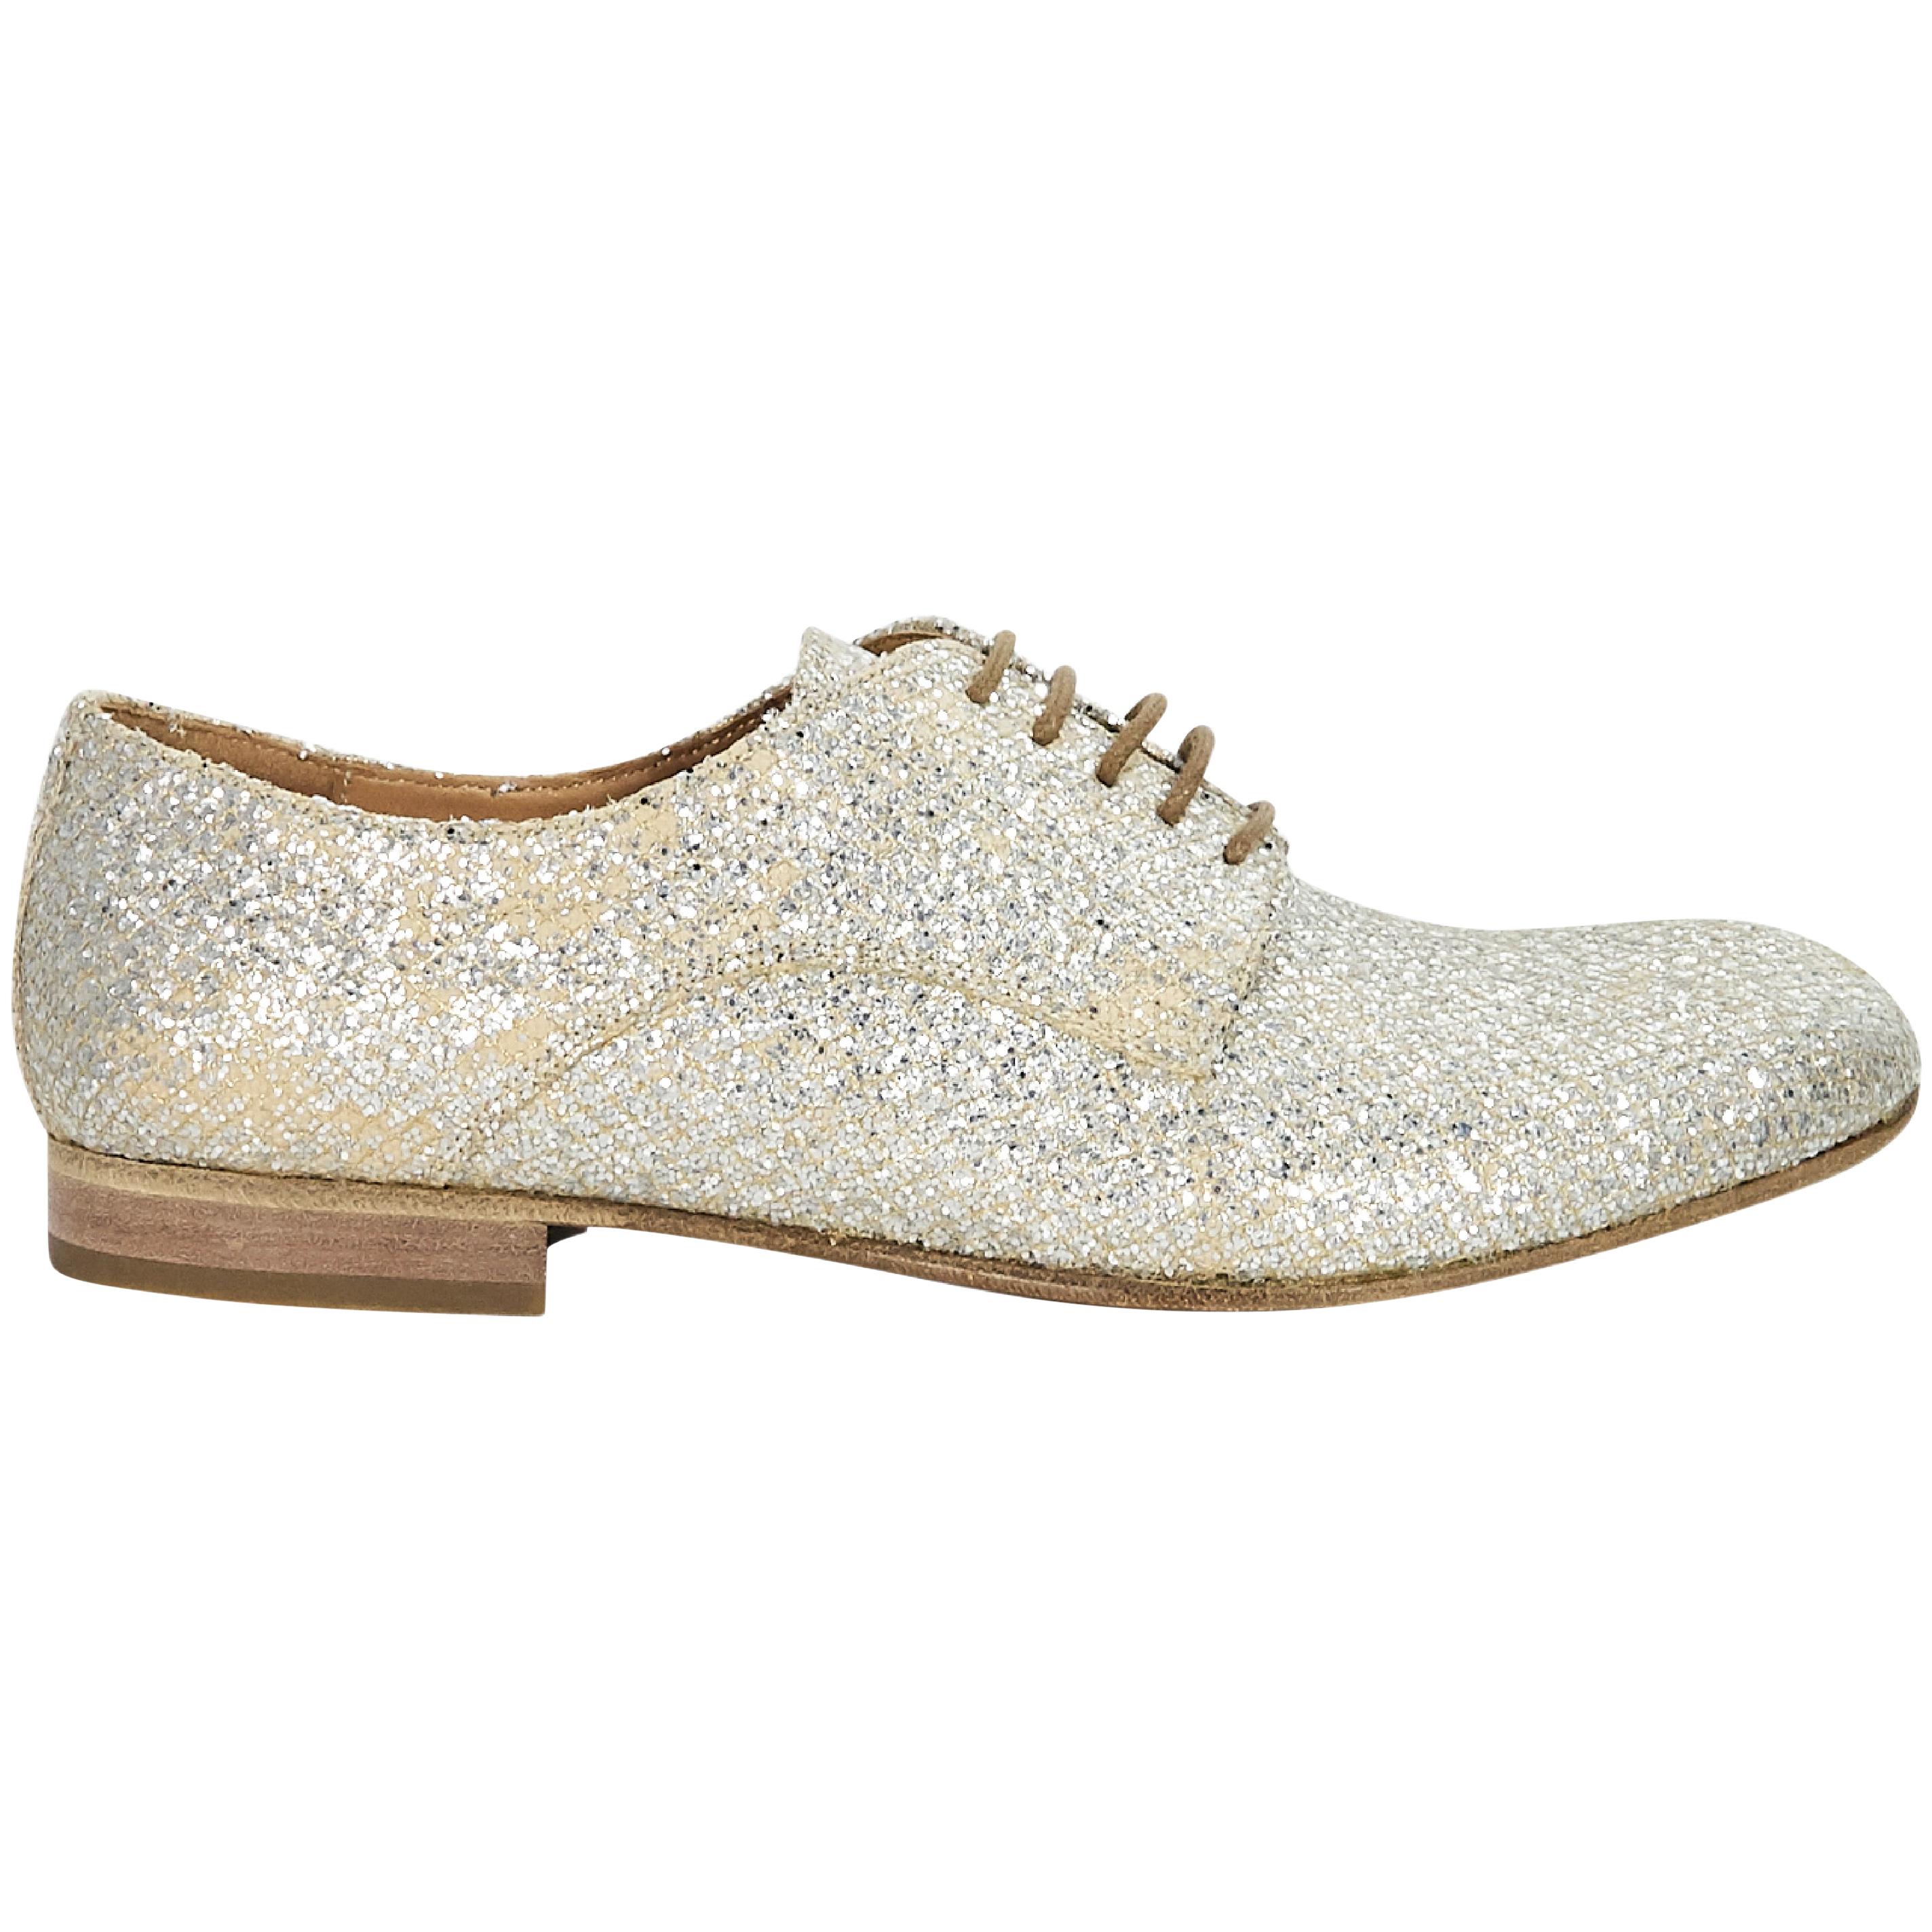 Maison Martin Margiela Silver Glittered Oxford Shoes